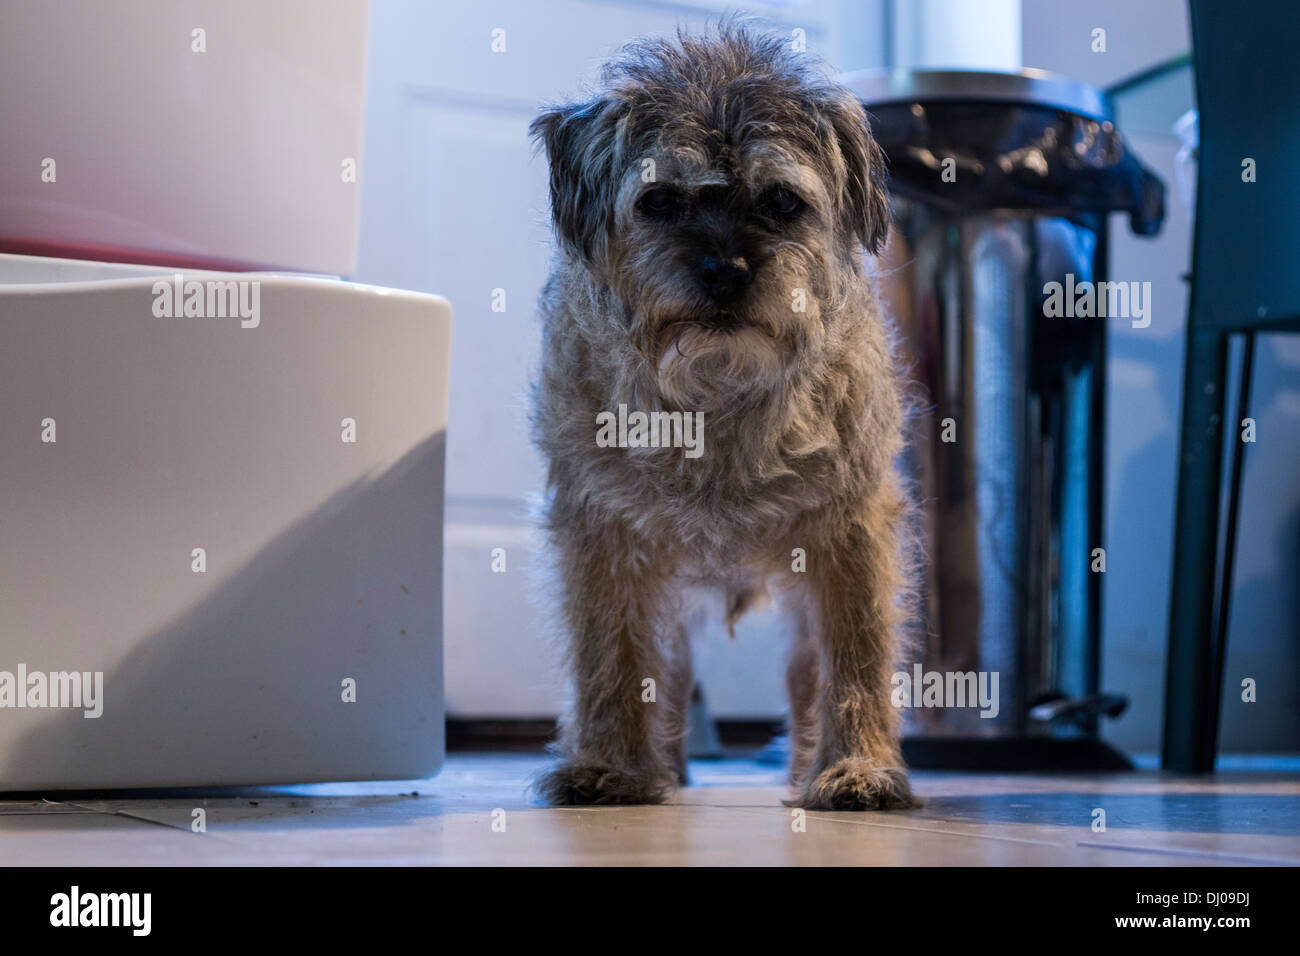 Border terrier dog shaved cut hair bin chair door Stock Photo - Alamy